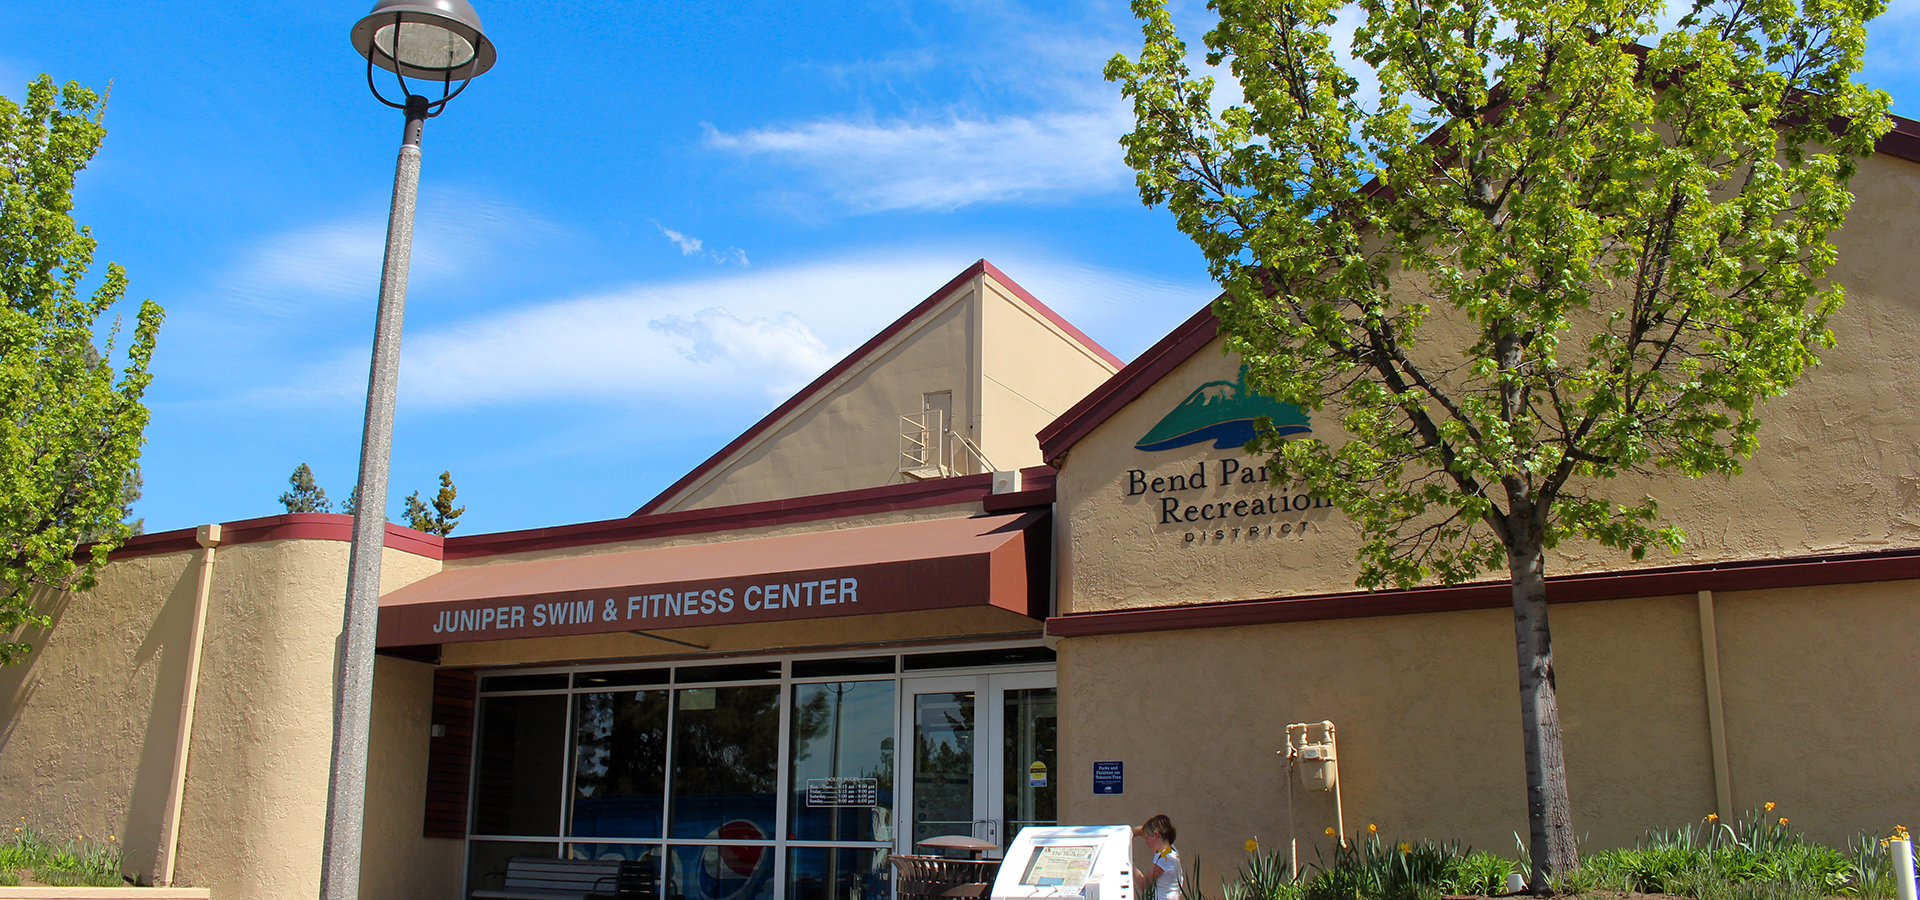 Juniper Swim and Fitness Center entrance.